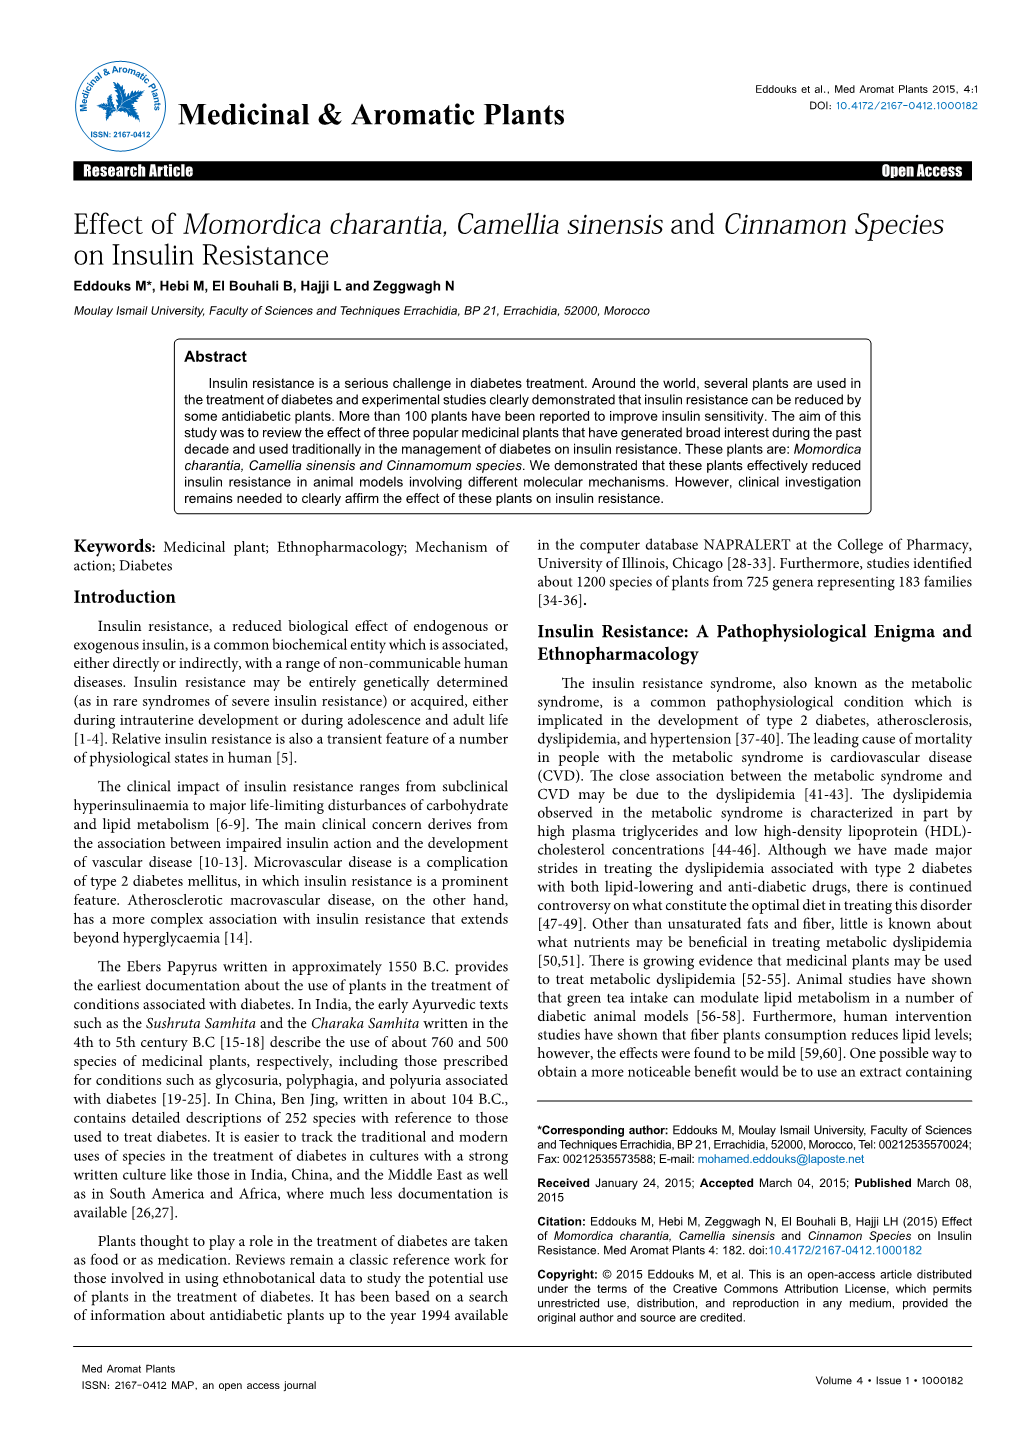 Effect of Momordica Charantia, Camellia Sinensis and Cinnamon